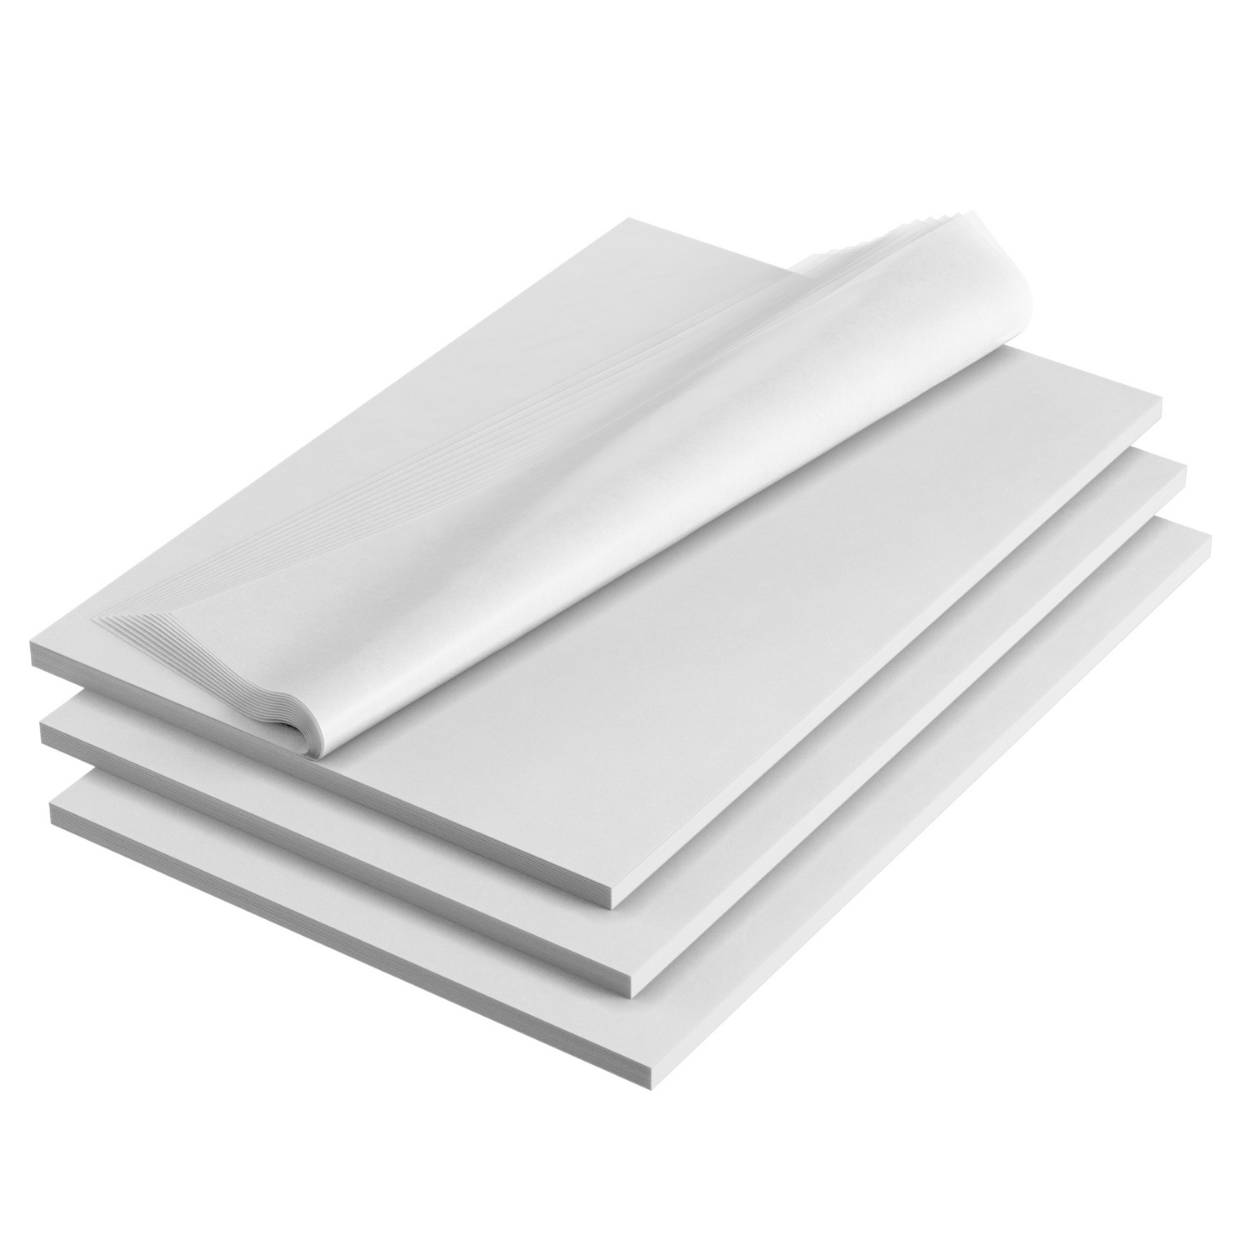  Bolsome 120 Sheets 20 * 14 Inches White Tissue Paper